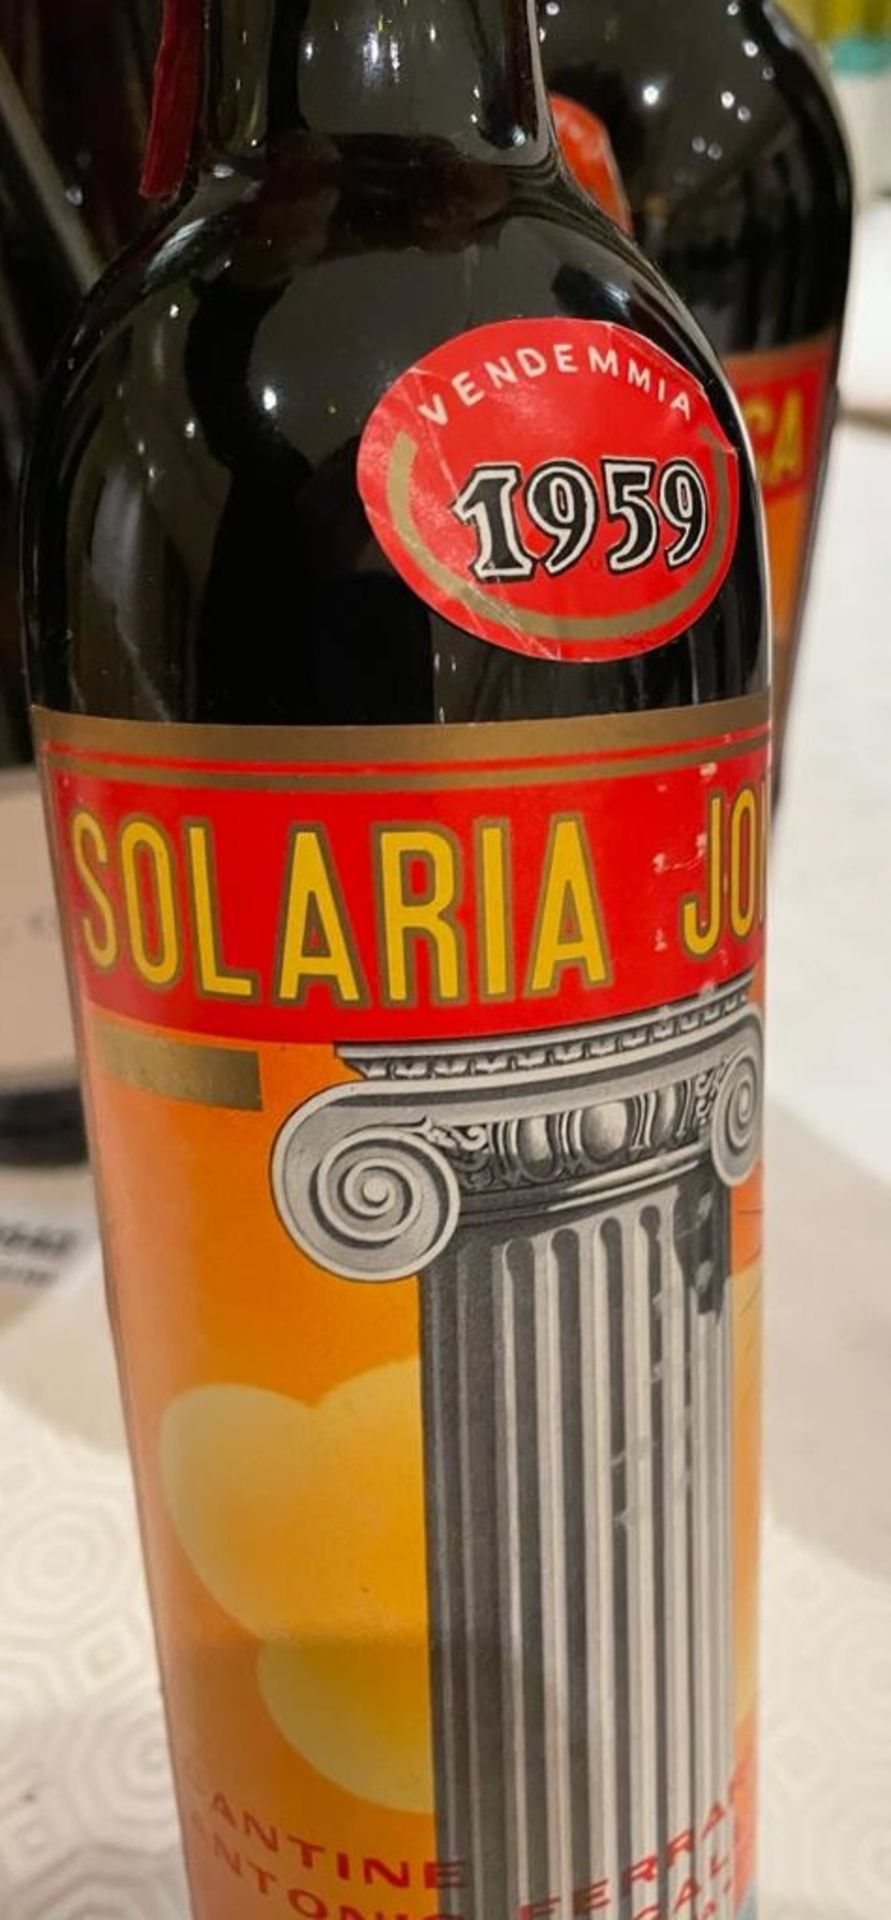 2 x Bottles Of SOLARIA JONICA CALLANTE VENDEMMIA 1959 PIEMONTE - 75cl New/Unopened Restaurant Stock - Image 2 of 4